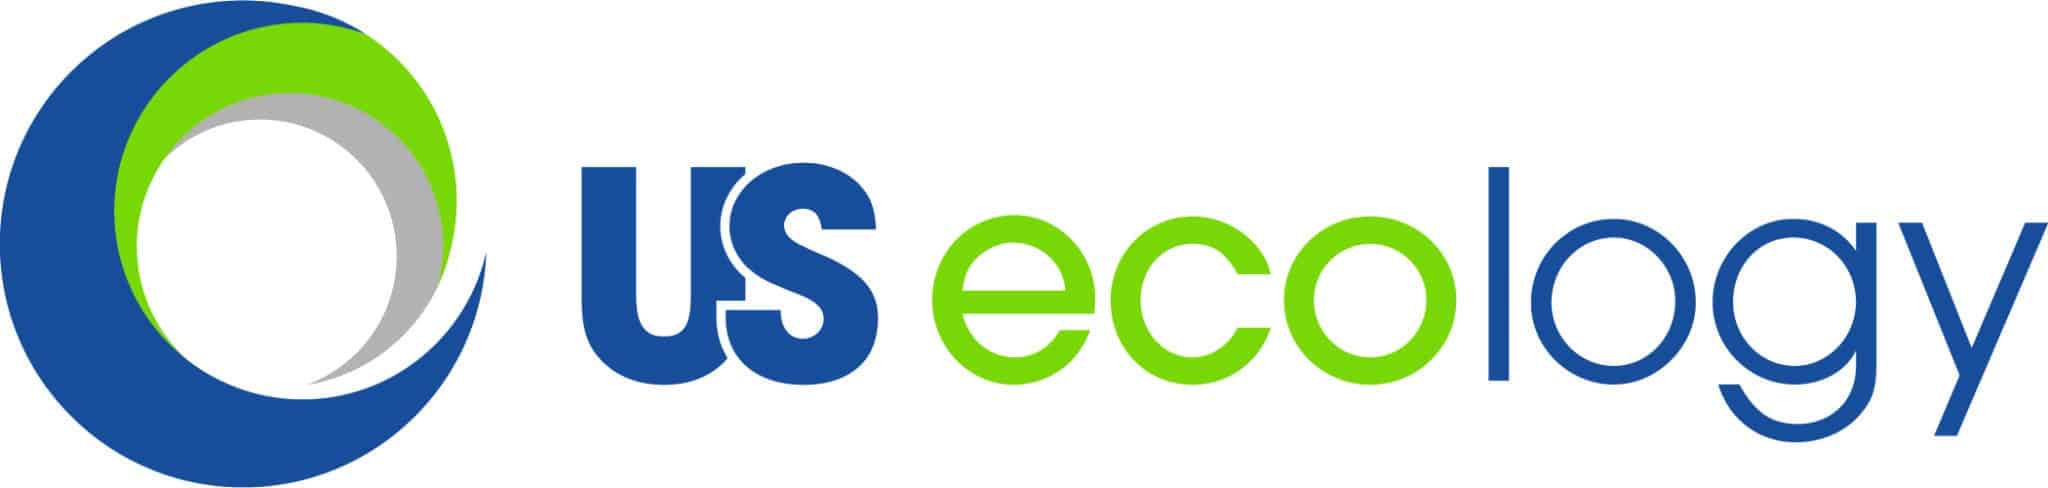 US ecology logo color